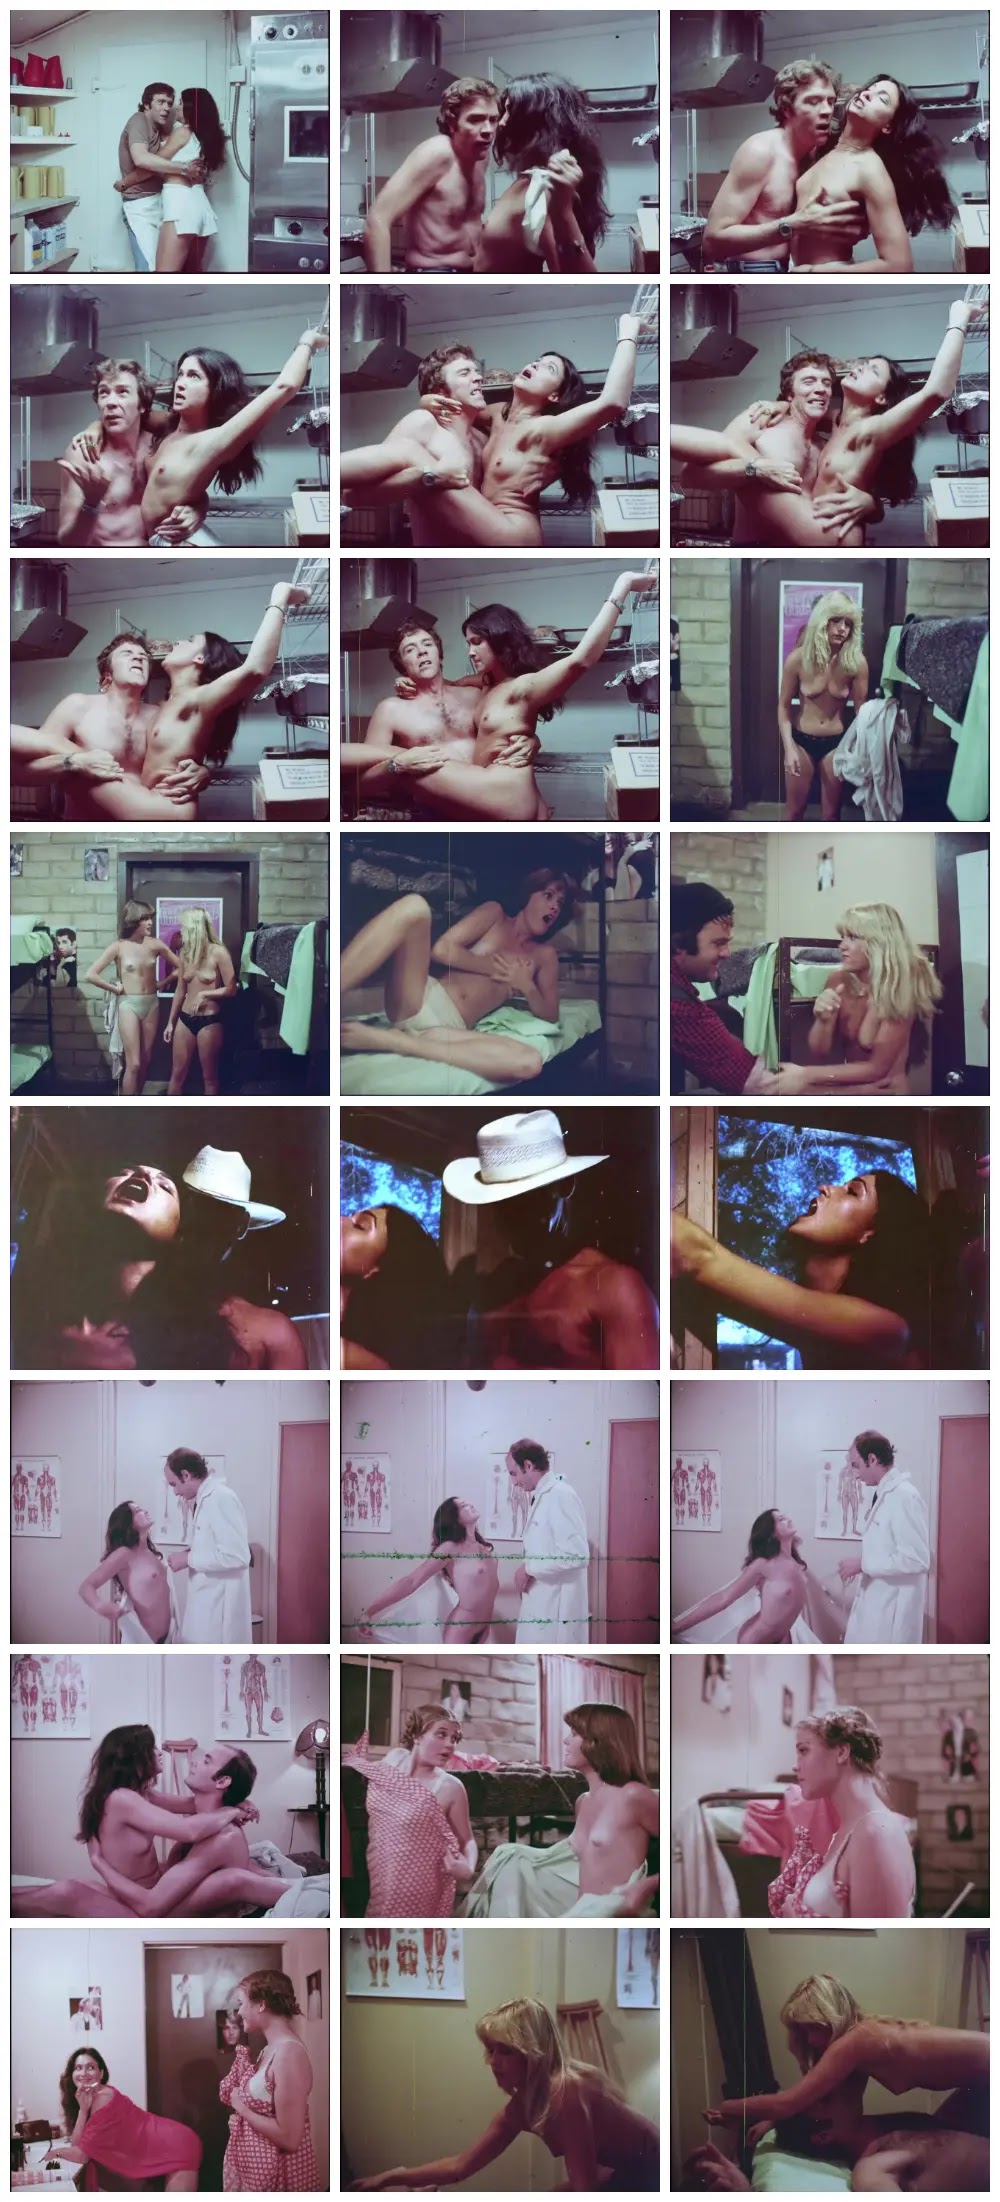 Summer Camp (1979) EroGarga Watch Free Vintage Porn Movies, Retro Sex Videos, Mobile Porn photo